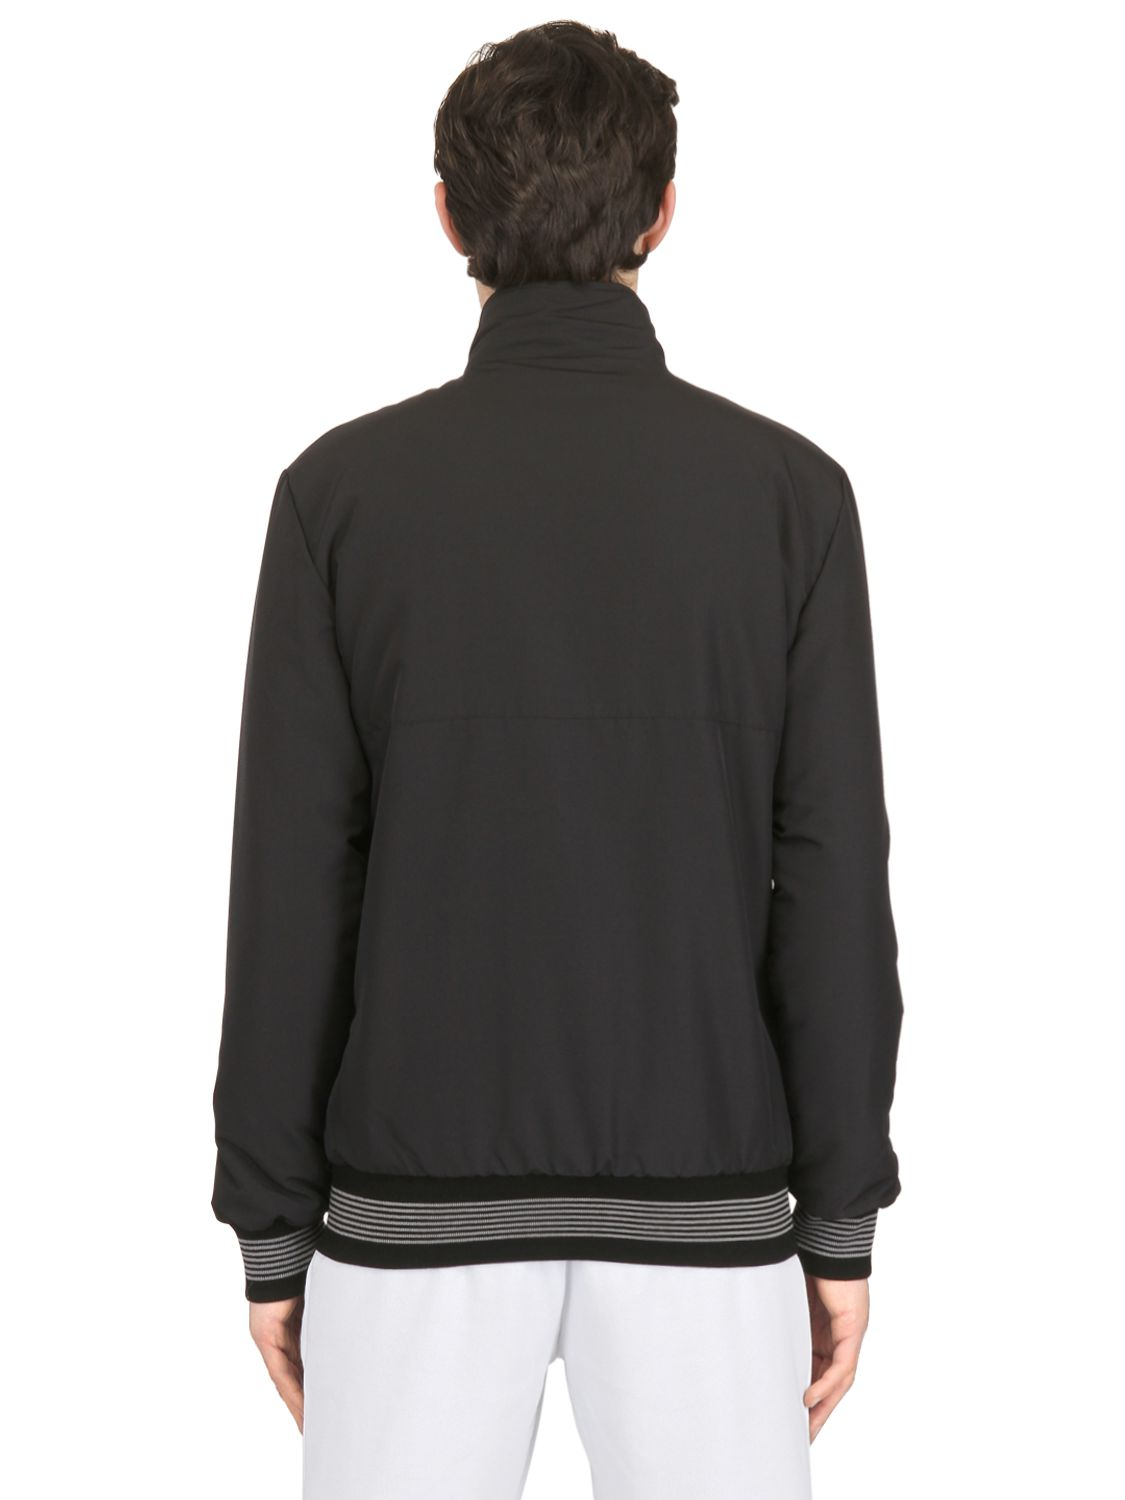 Emporio Armani Windproof Ea7 Golf Jacket in Black for Men - Lyst